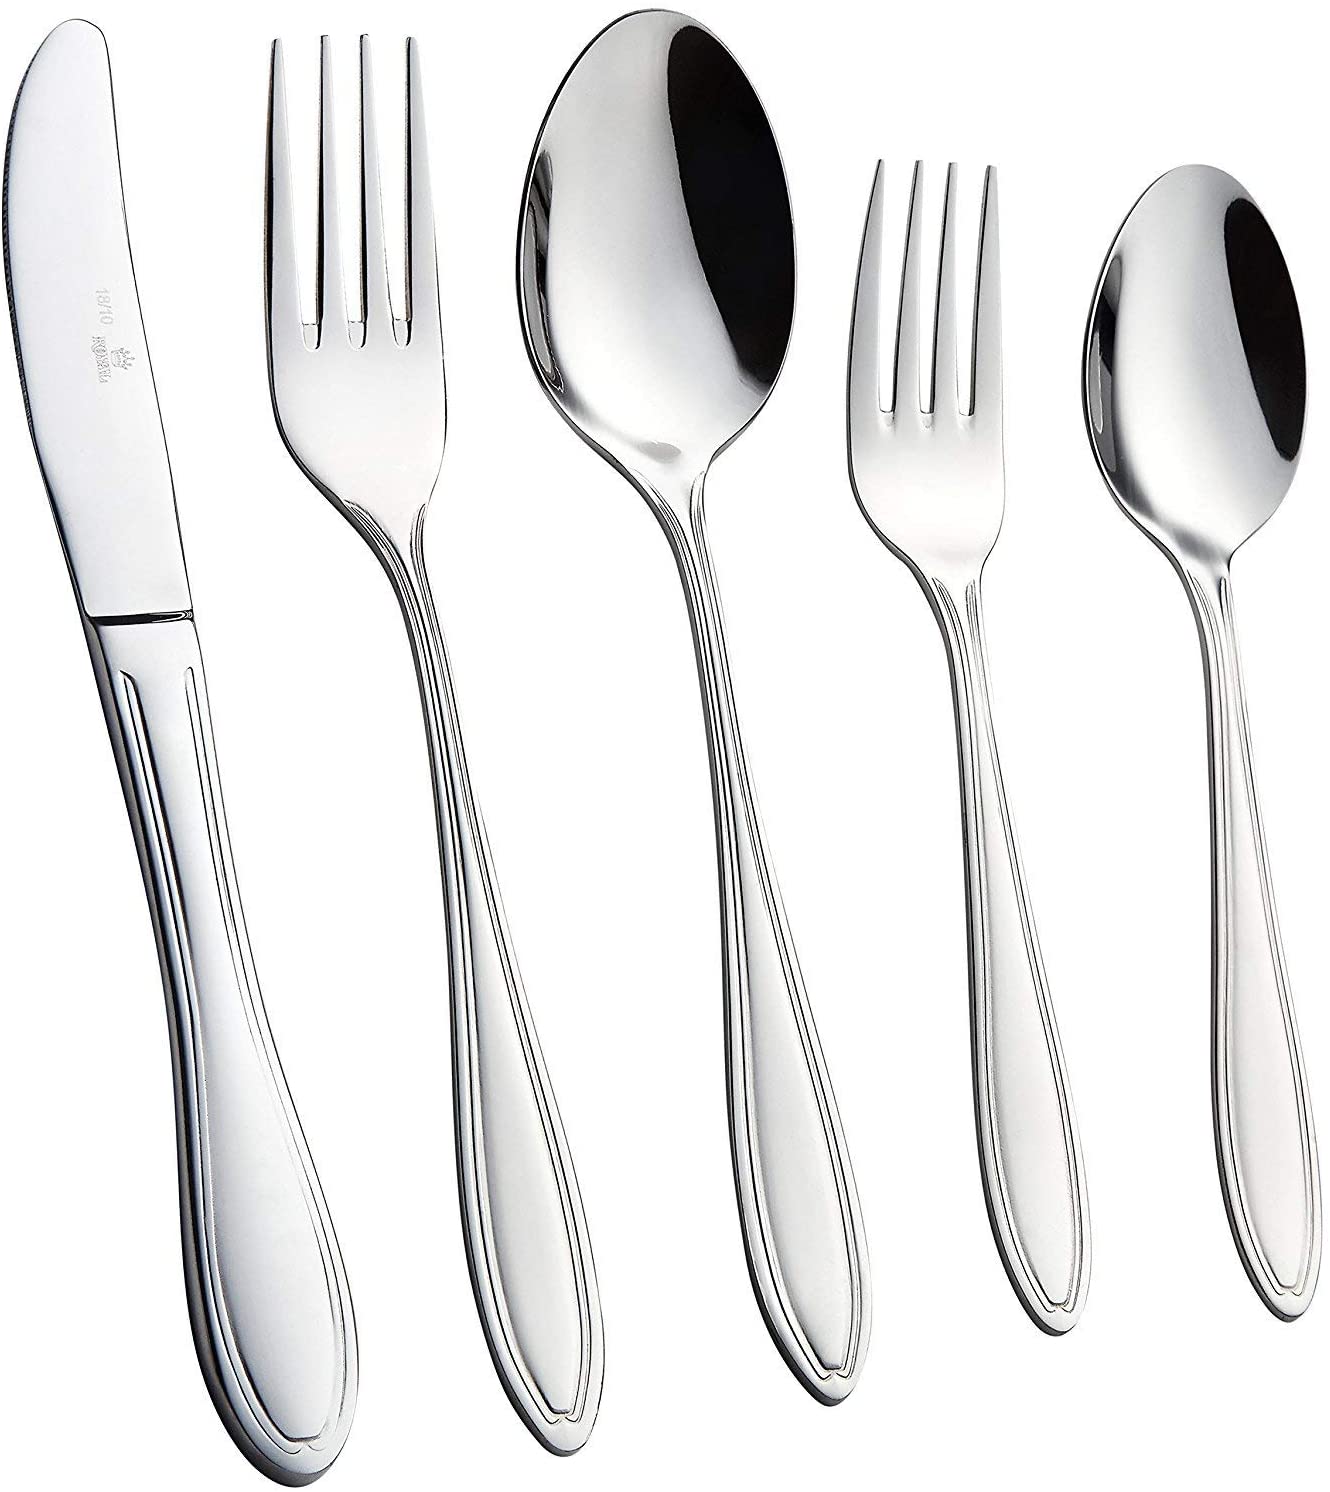 Royal Silverware Stainless Steel Mirror Polished Cutlery Flatware Set, 20-Piece